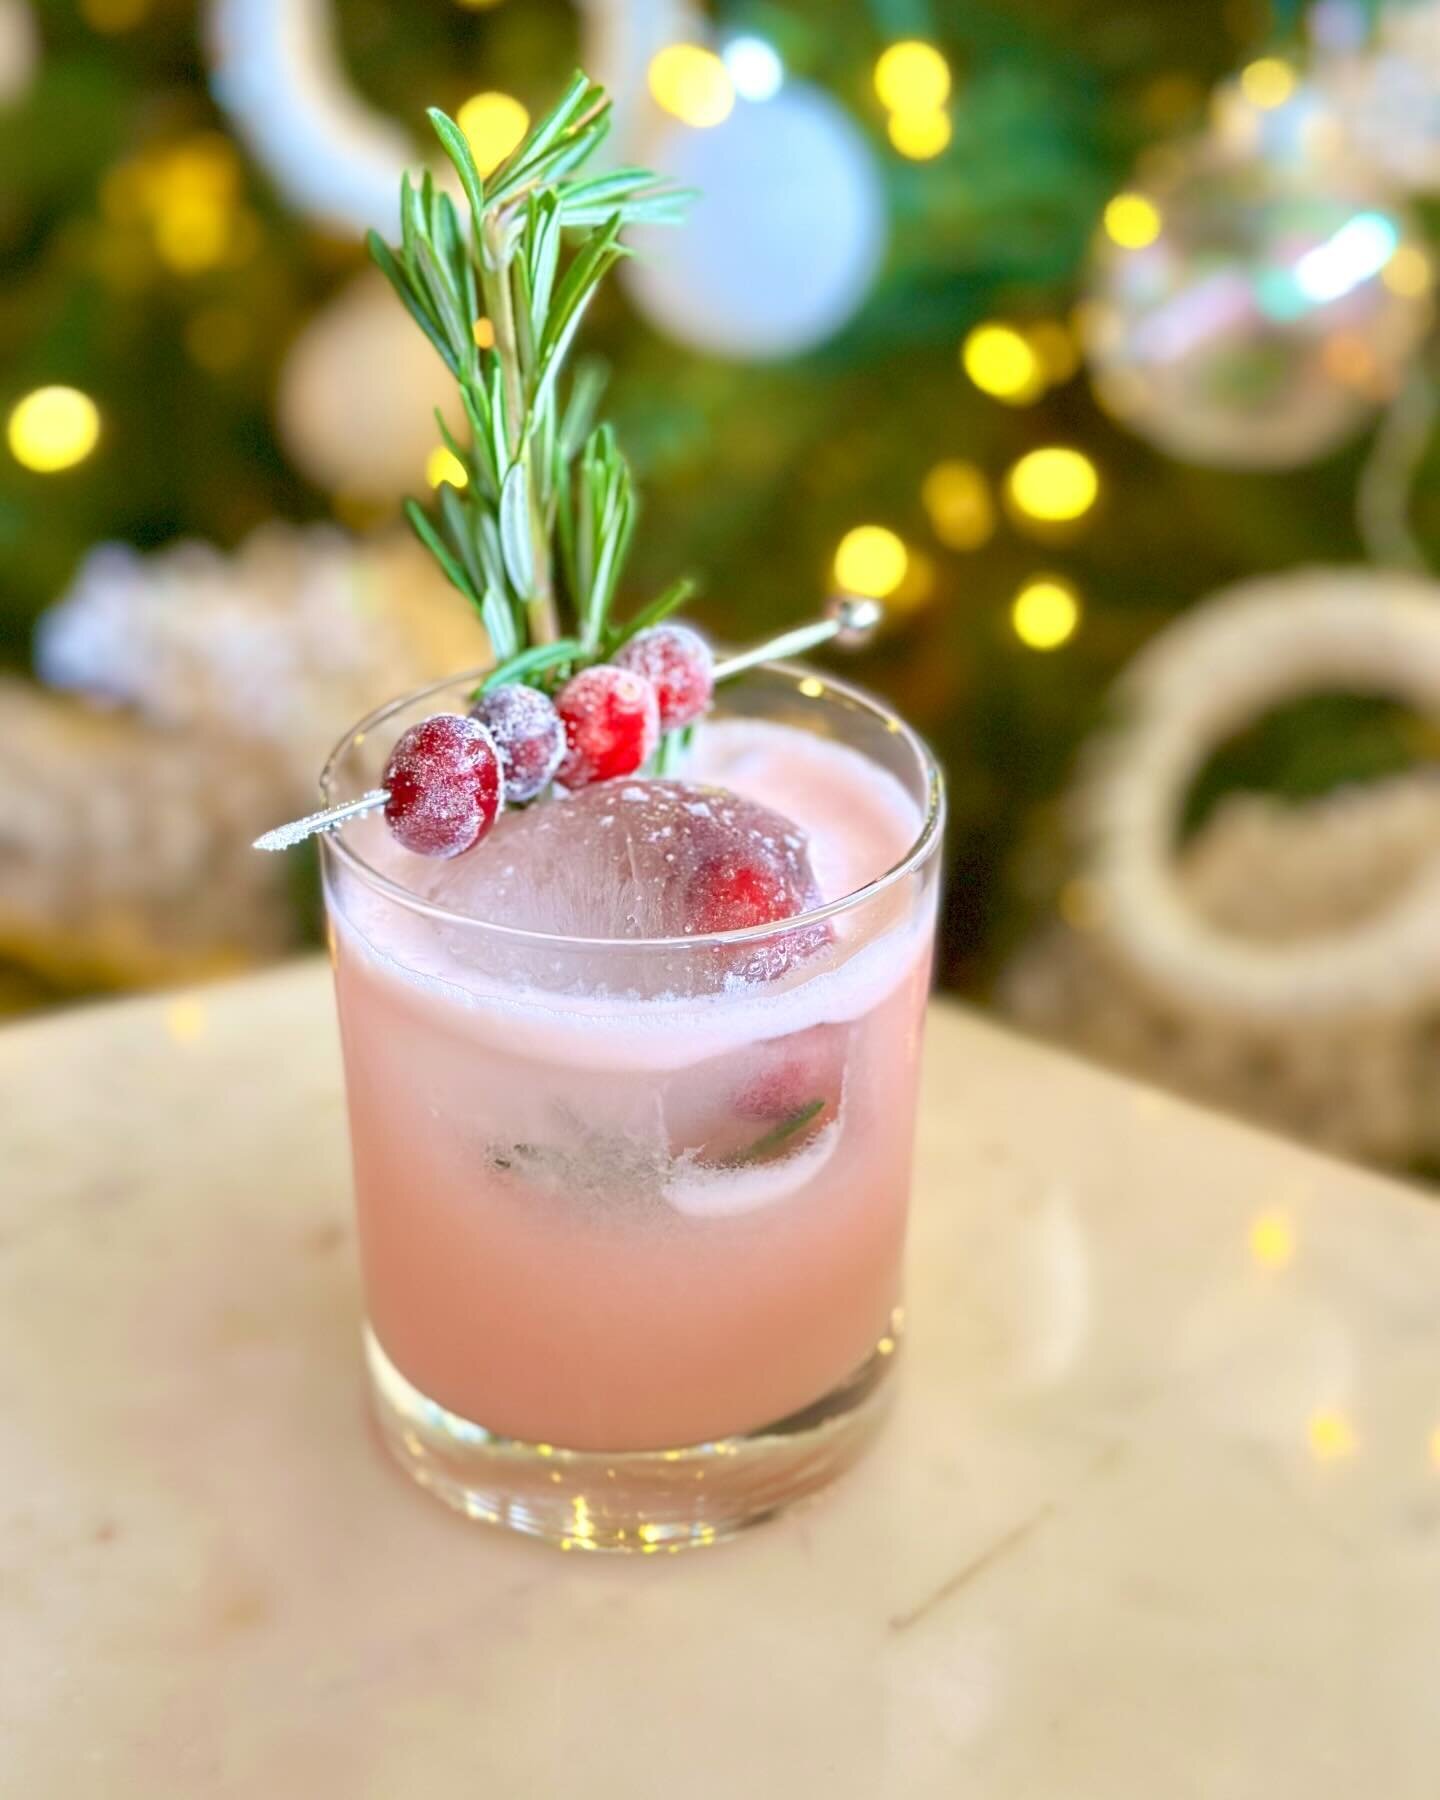 Cheers to the Christmas Season!

#cranberrymargarita #lakehighlands #dallasdining #lheats #christmascocktails #santaclauseiscomingtotown